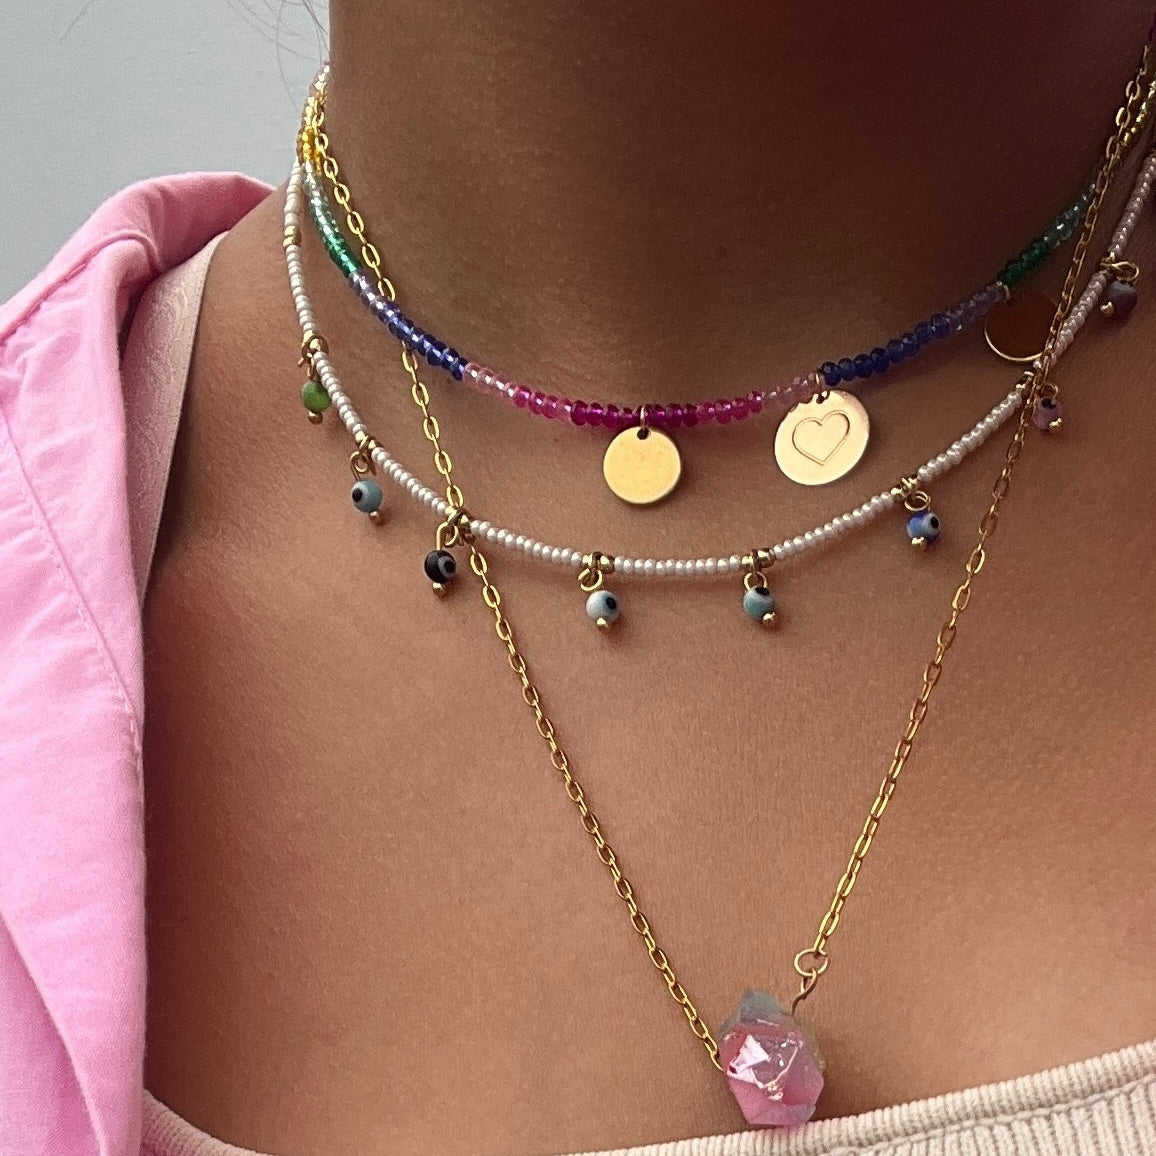 Summer necklaces